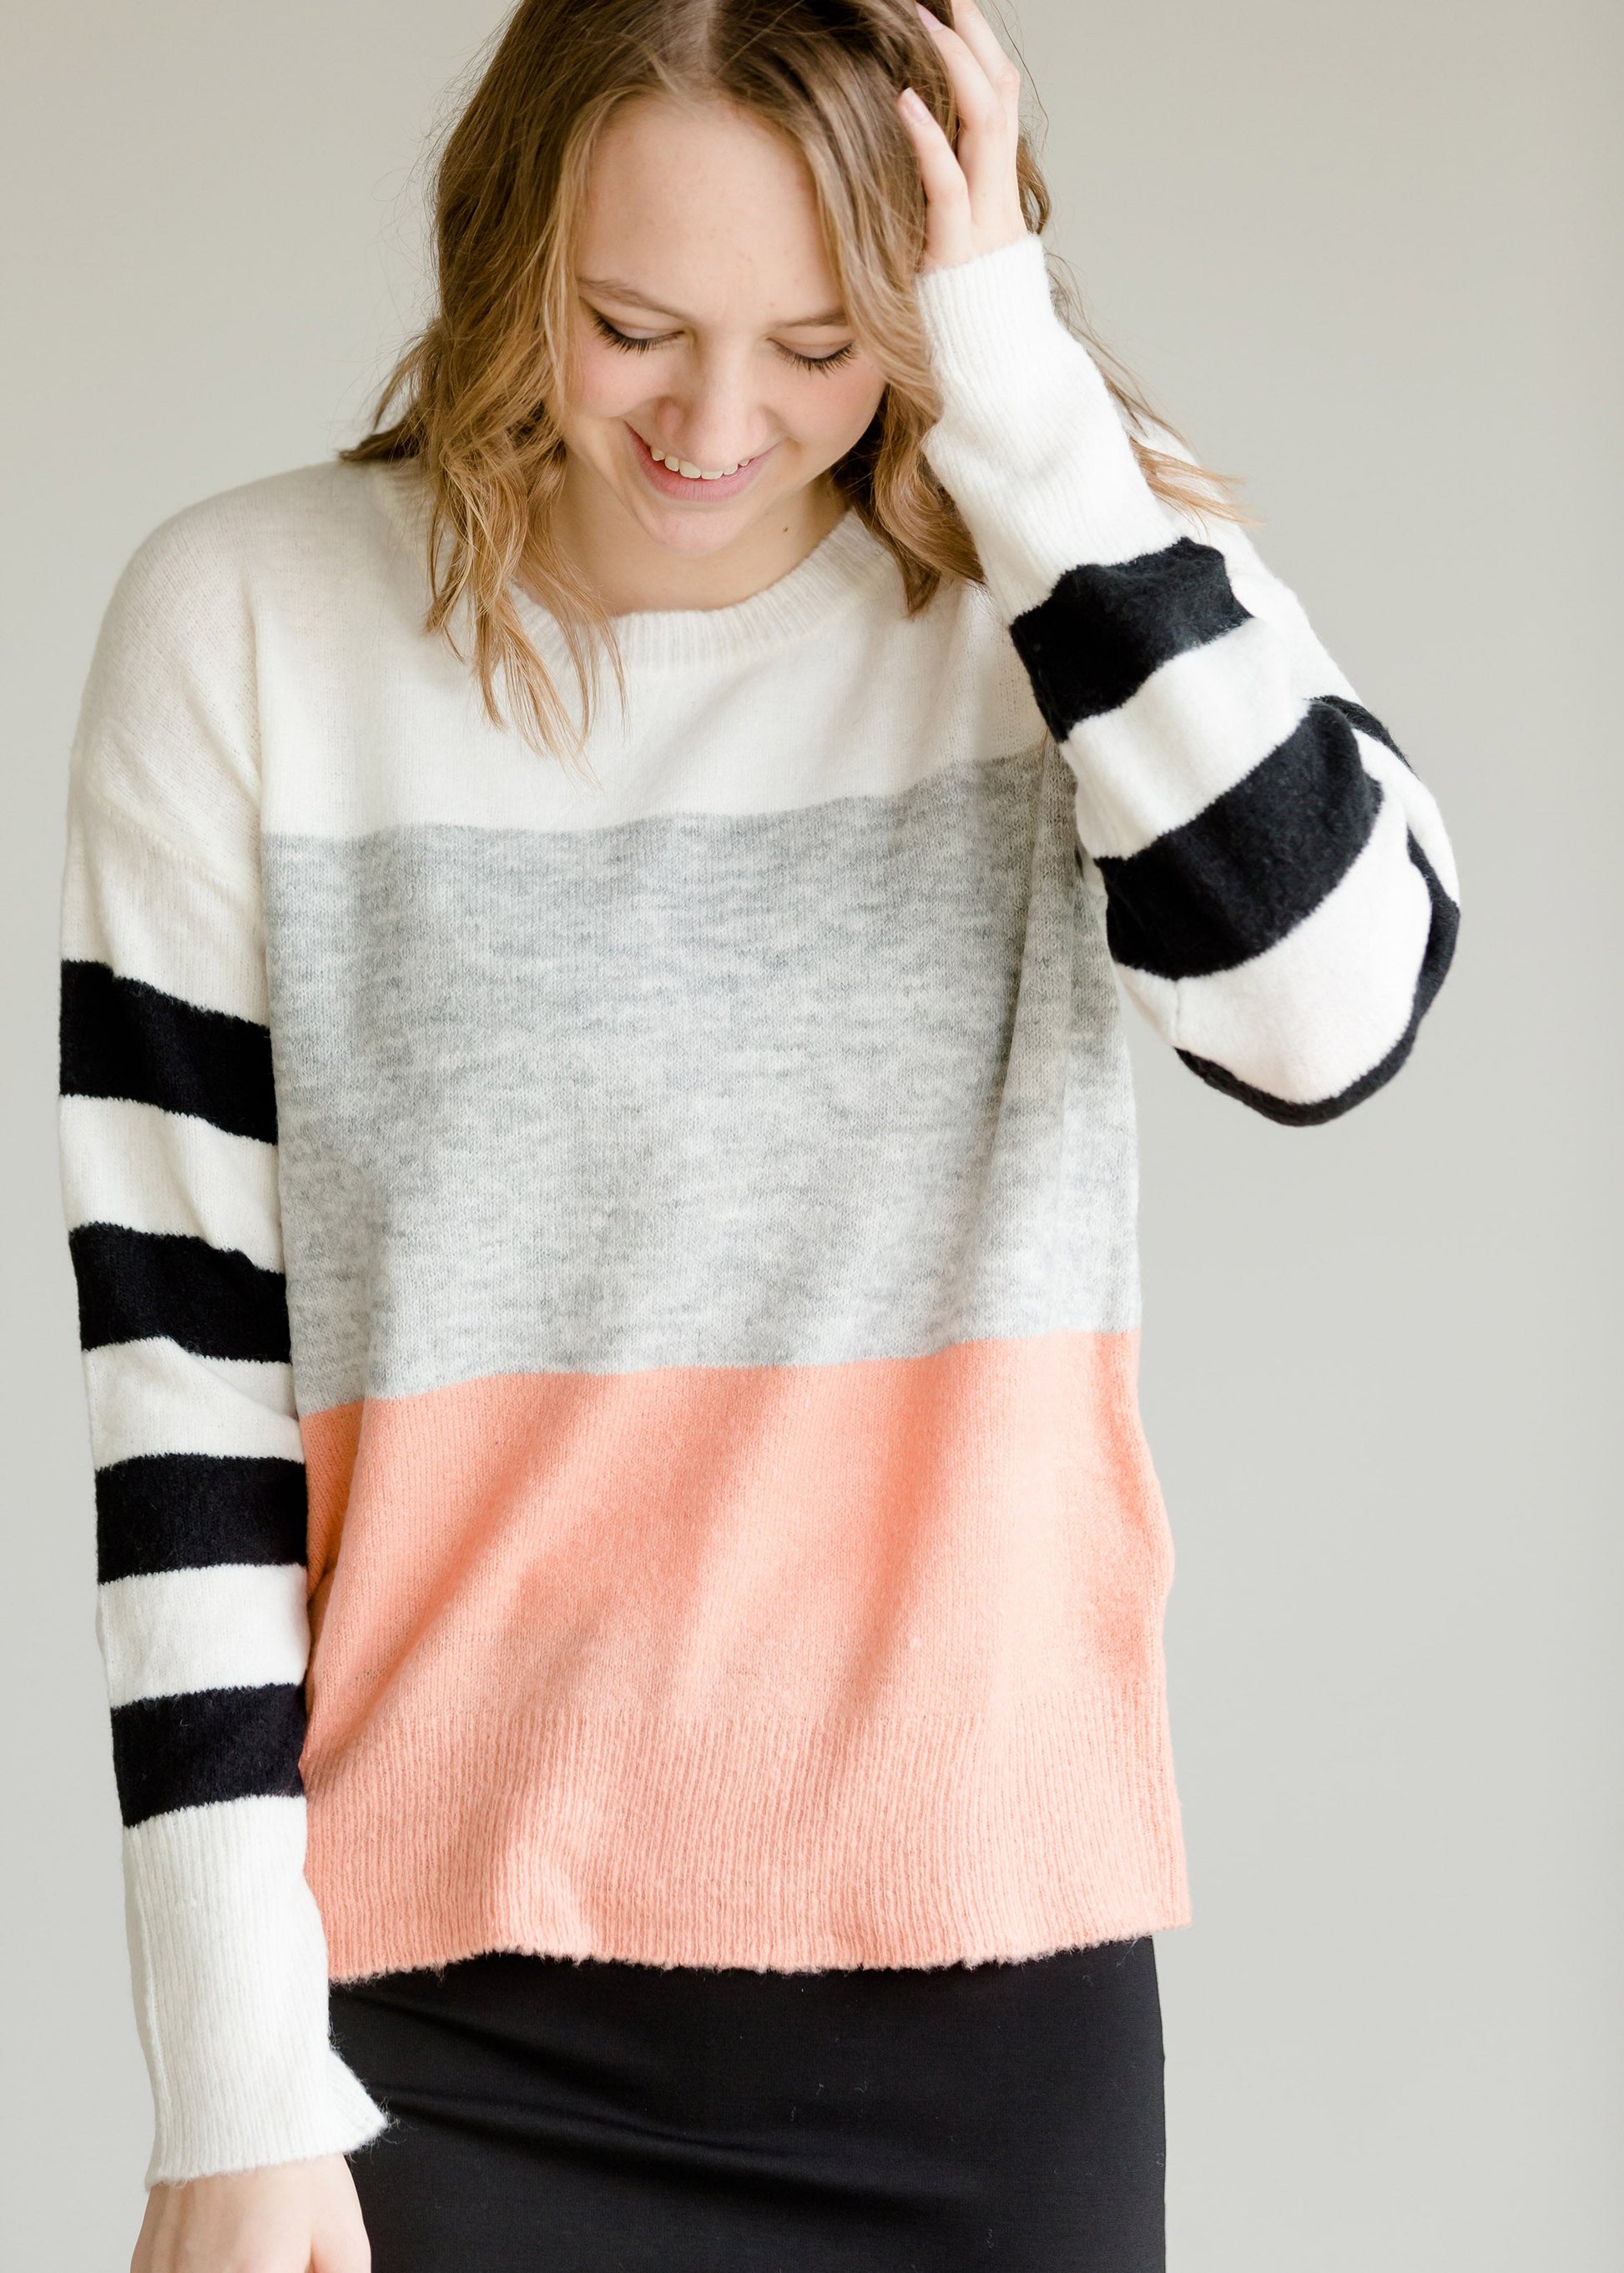 Colorblock Striped Knit Sweater-FINAL SALE Tops